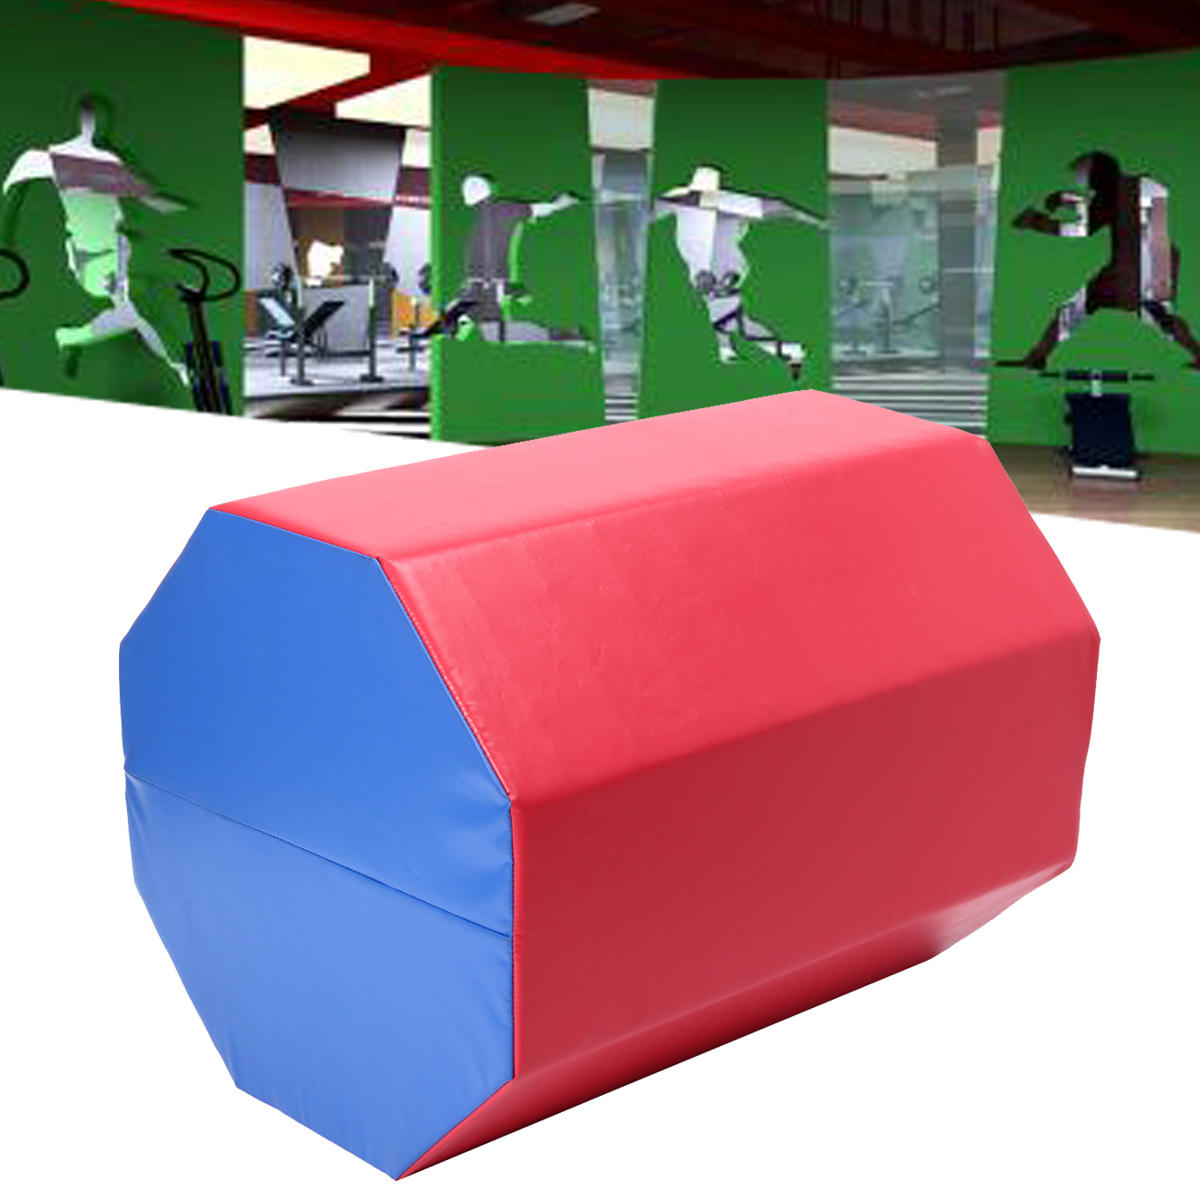 23.6×23.6×30.3inch Octagonal Jumping Box Skip Gymnastics Sport Training Exercise Pad Air Track Mat